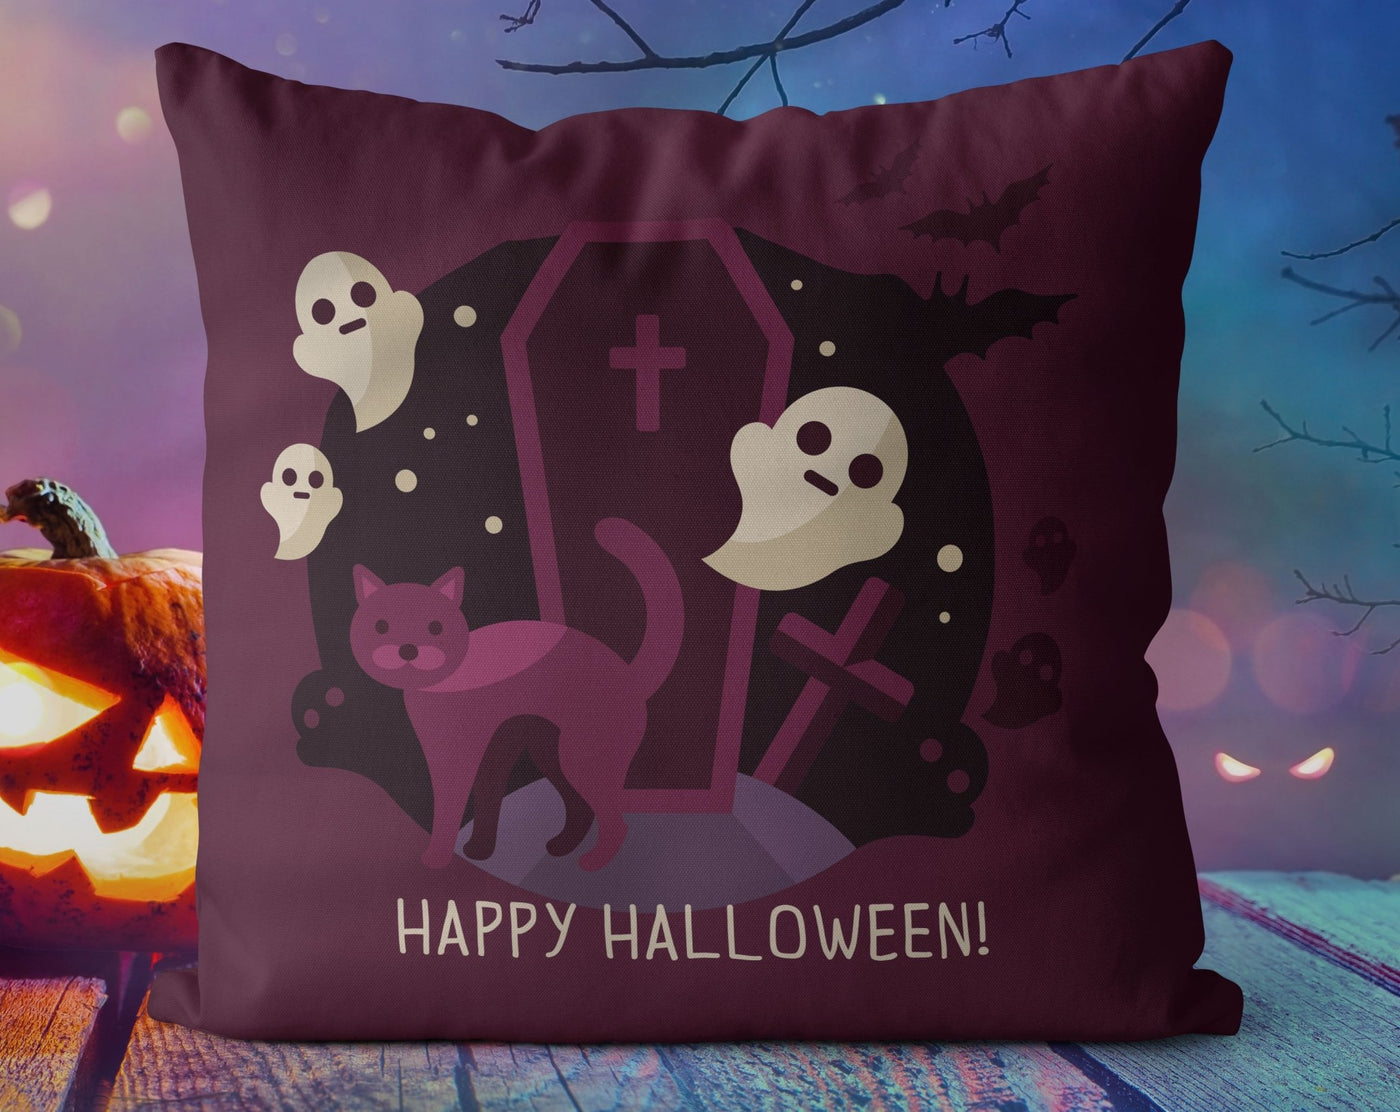 Halloween Ghosts Cat jack o'lantern Purple Magenta Orange Square Pillow Cover Throw with Insert - Cush Potato Pillows